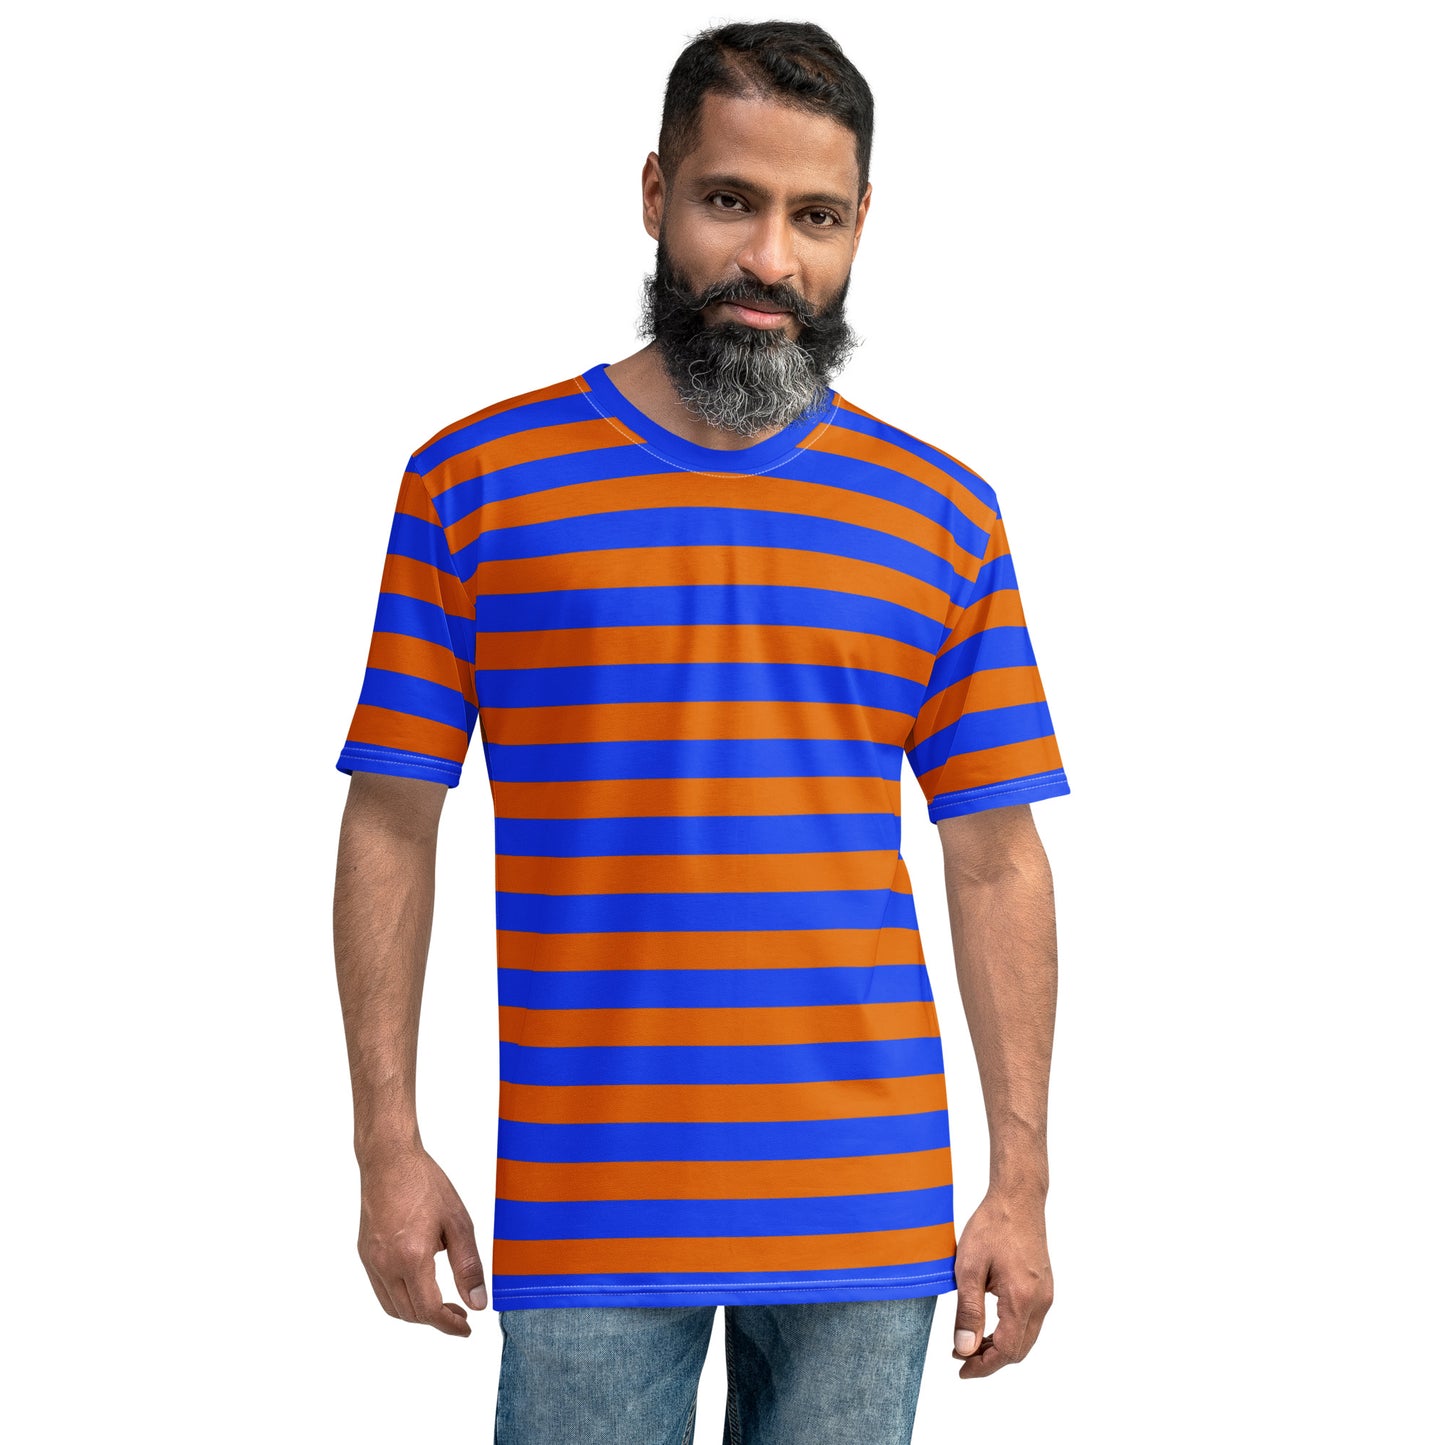 Blue and orange striped men's T-shirt